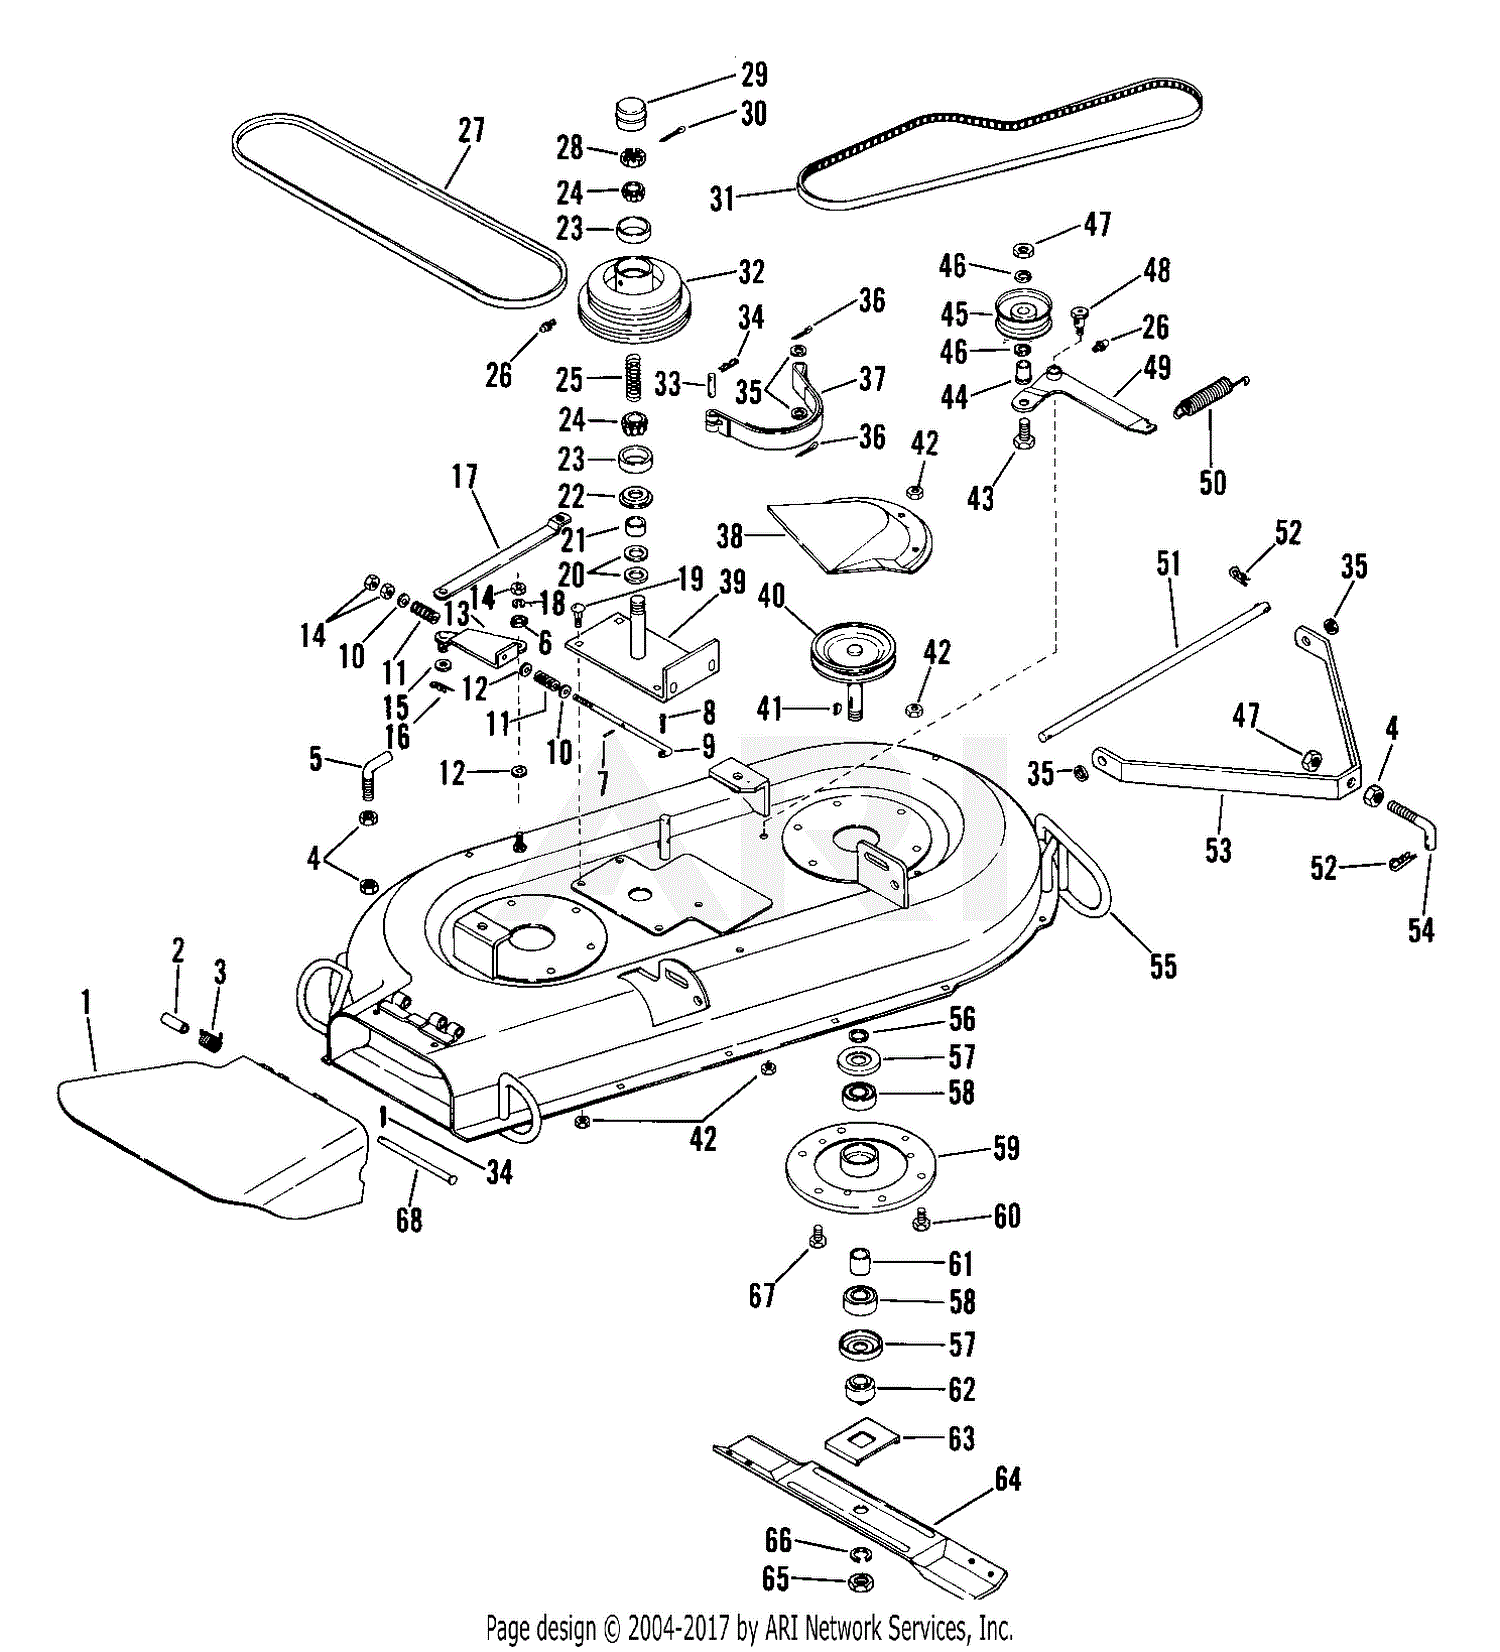 John Deere C381 & C392 Spin Spreader Parts Manual